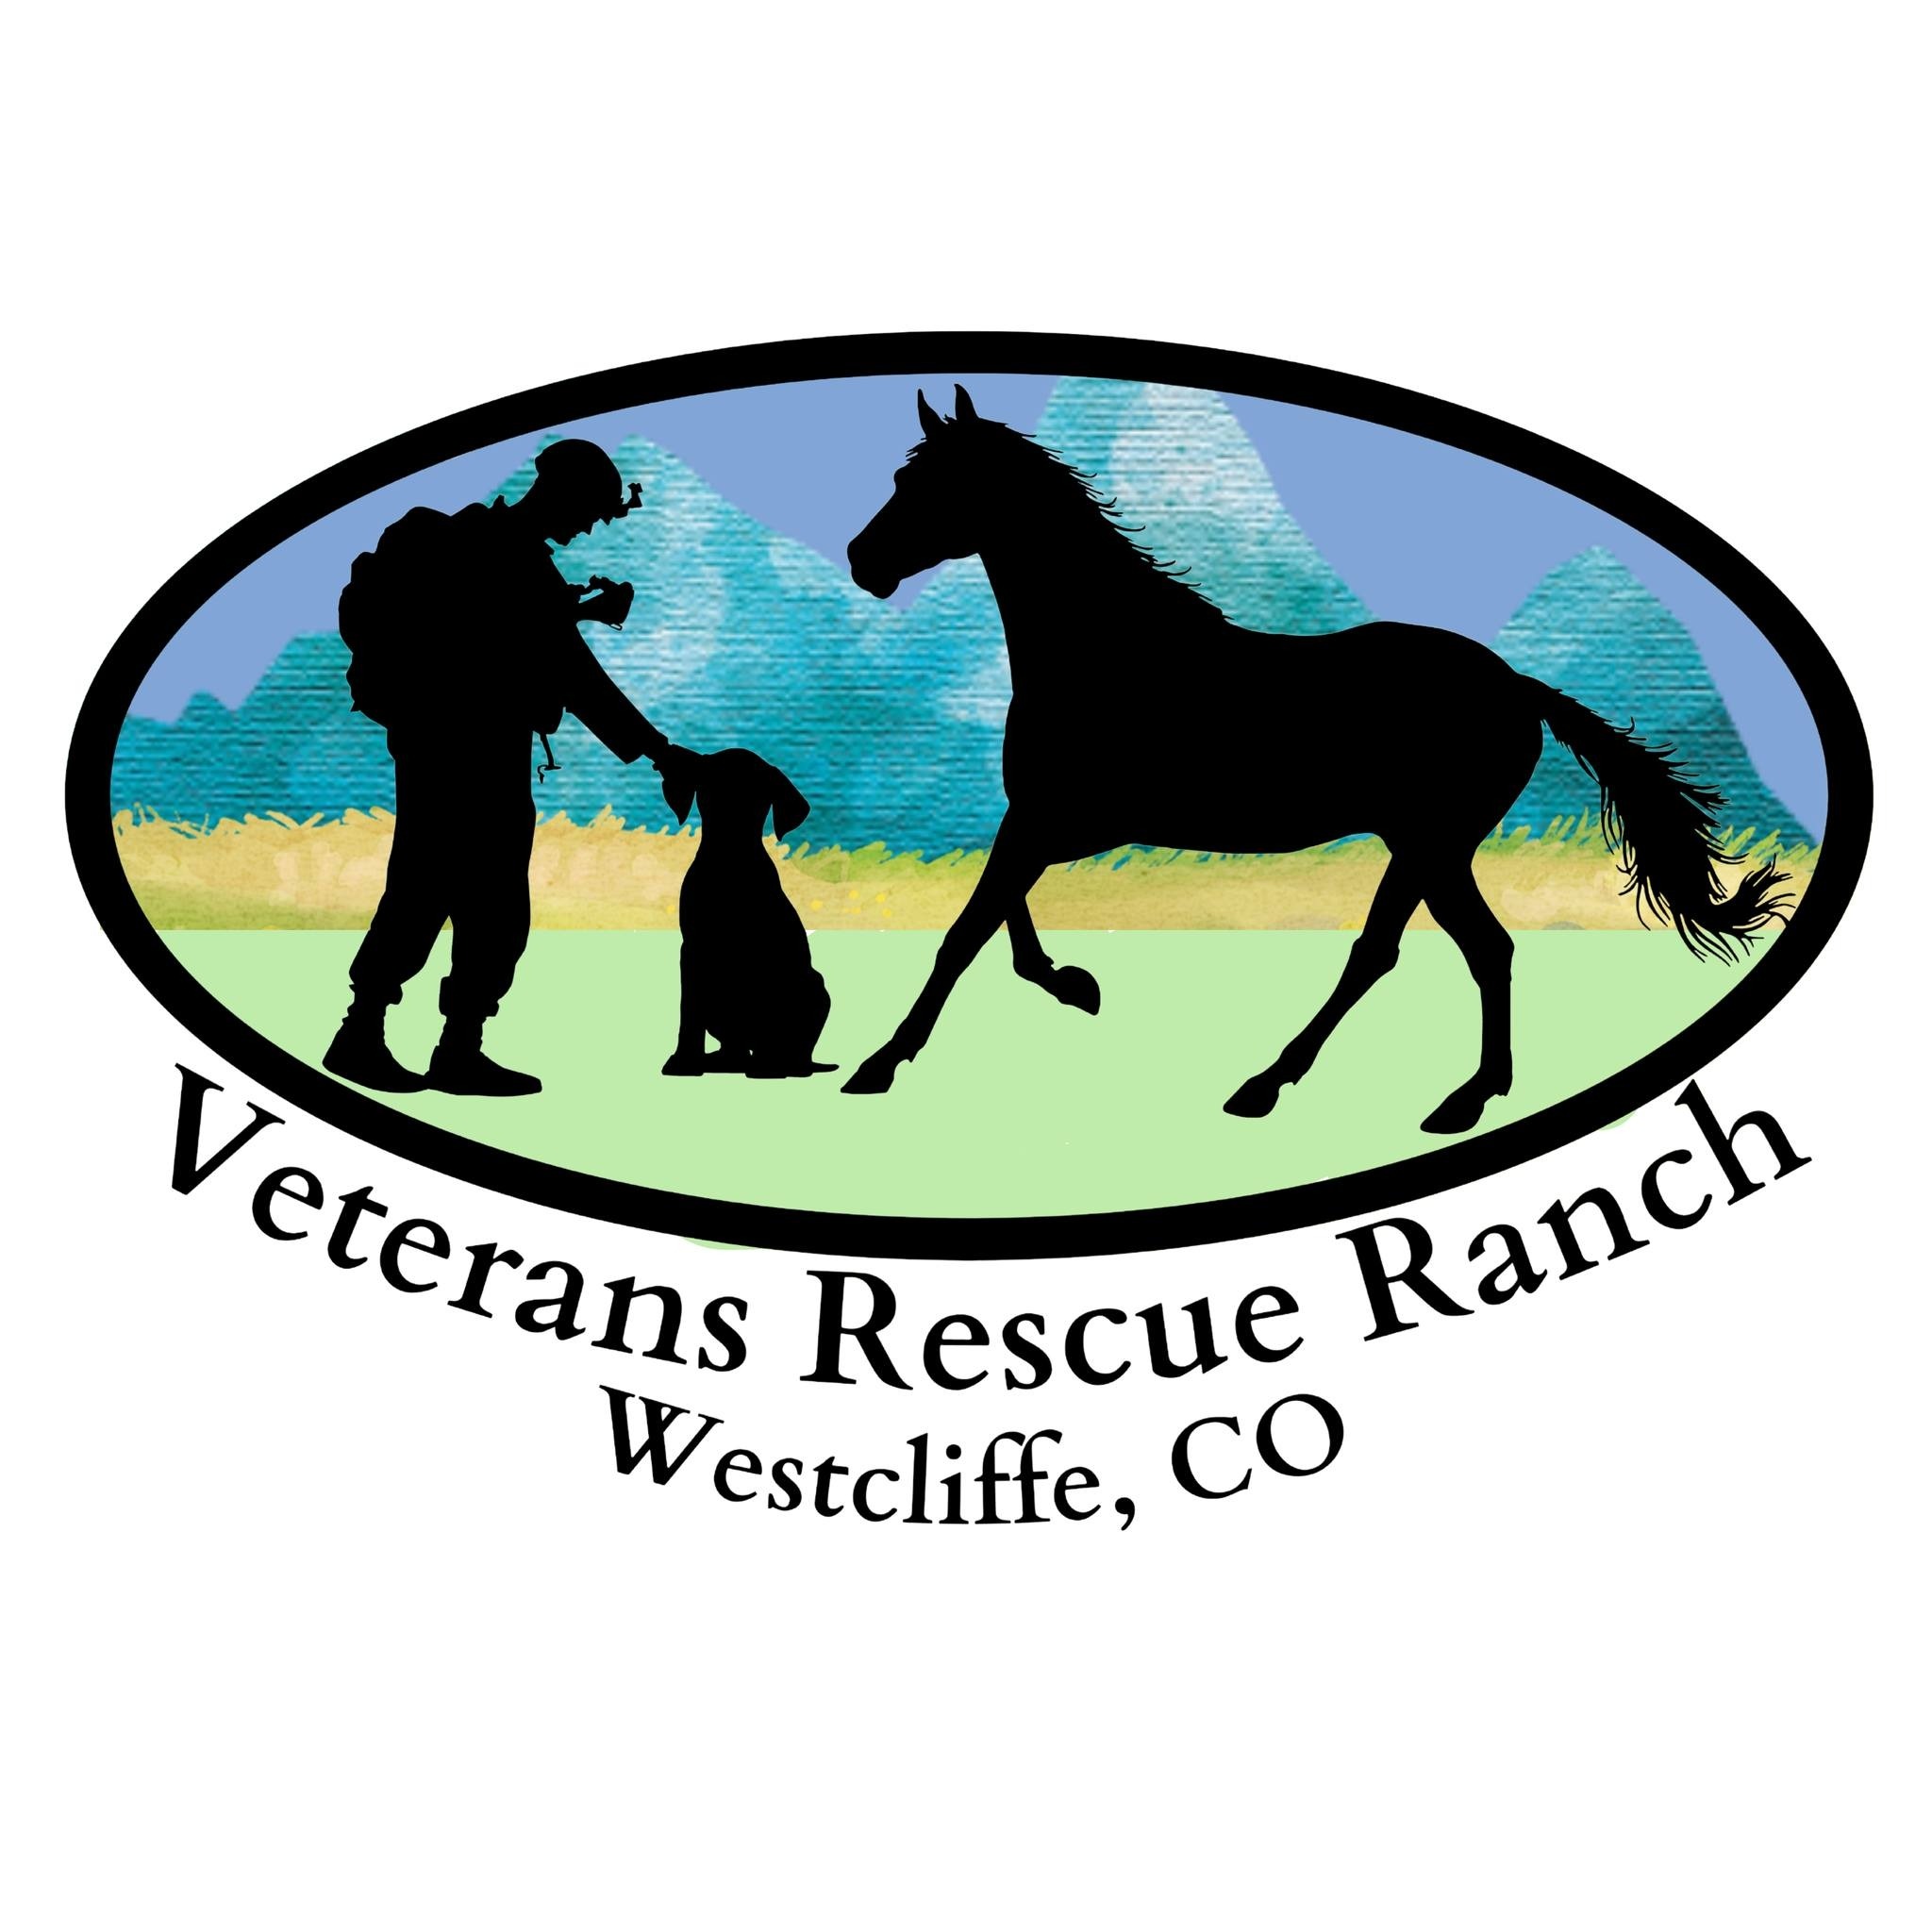 Veterans Rescue Ranch LTD